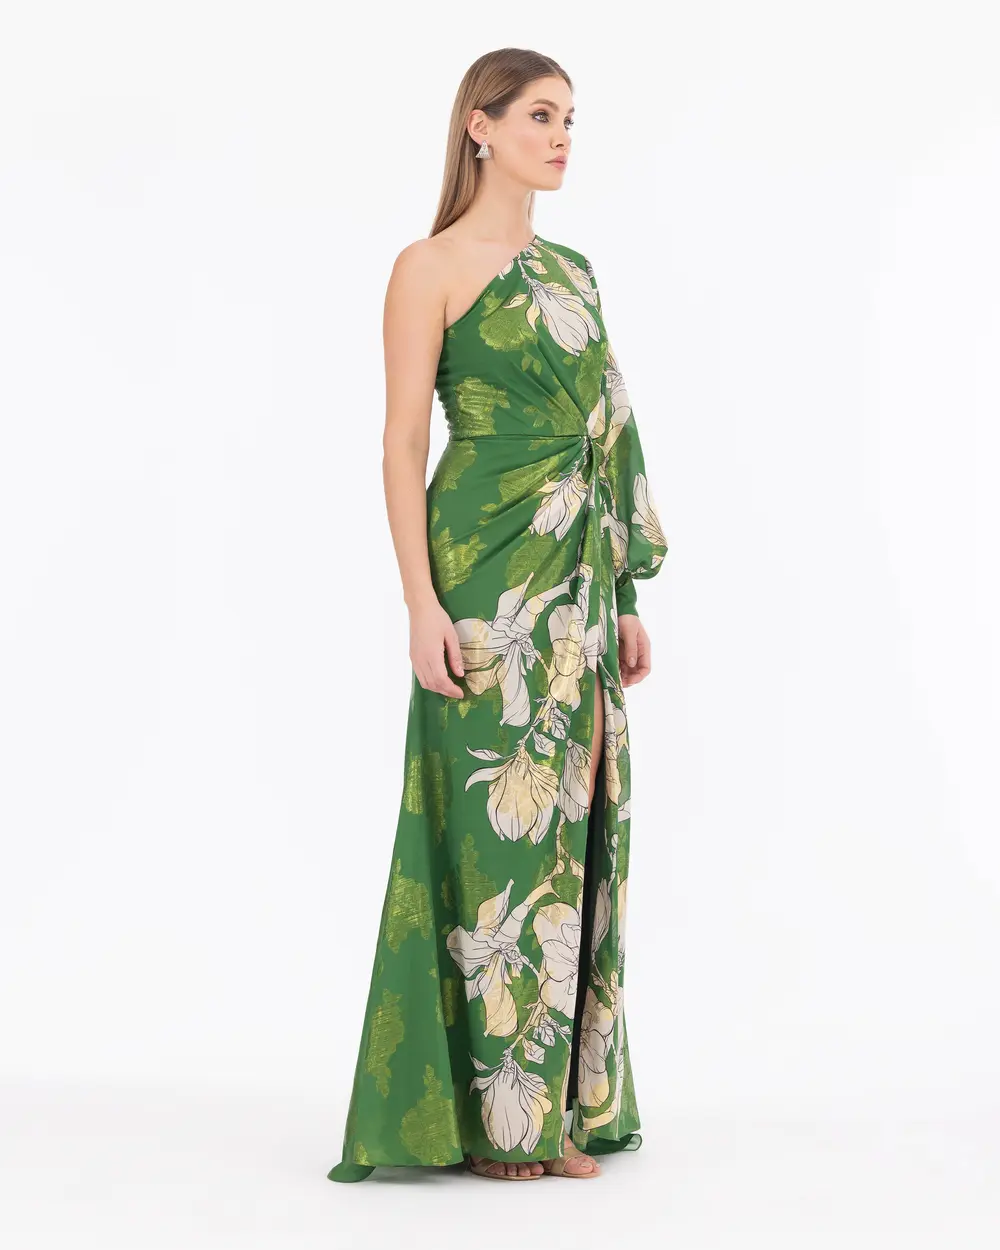 Floral Patterned Single Sleeve Asymmetrical Collar Evening Dress